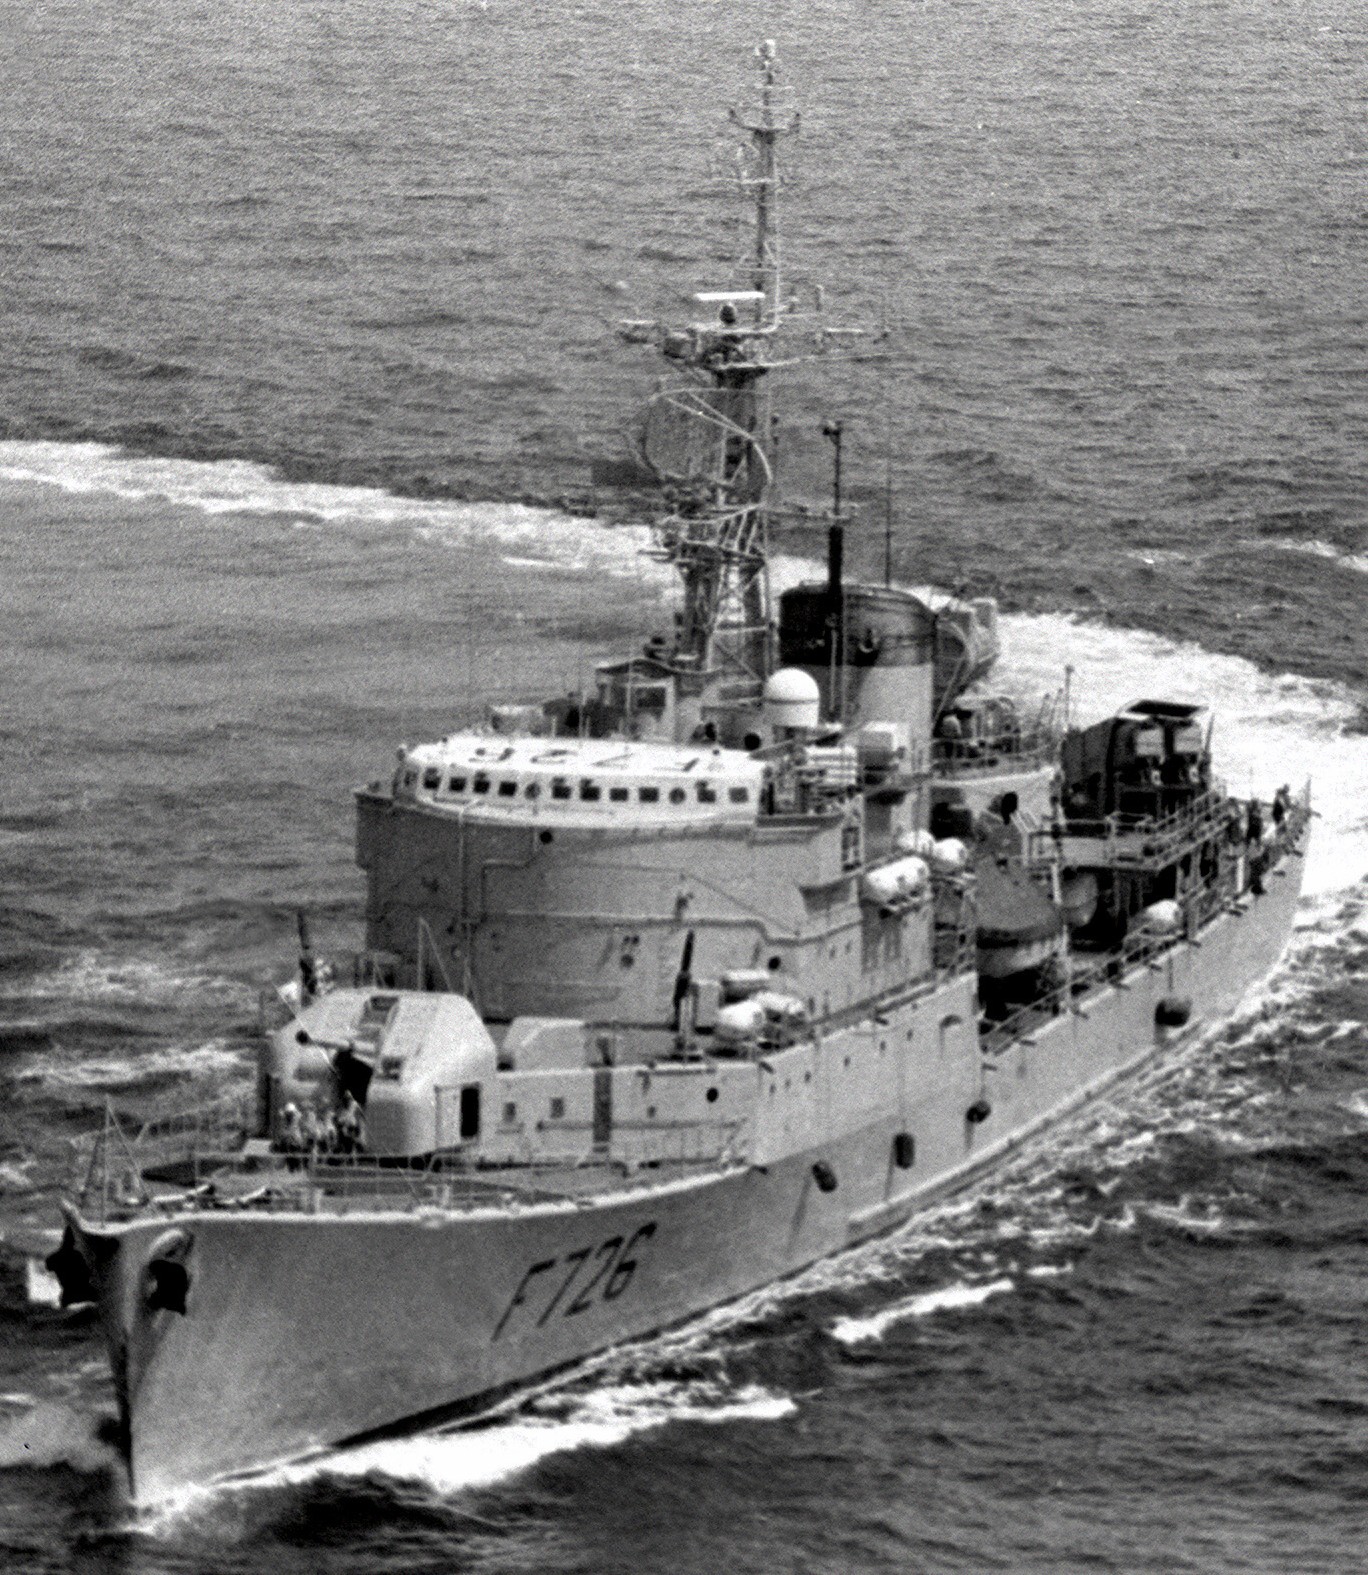 riviere class frigate aviso escorteur f-726 commandant bory french navy marine nationale 06